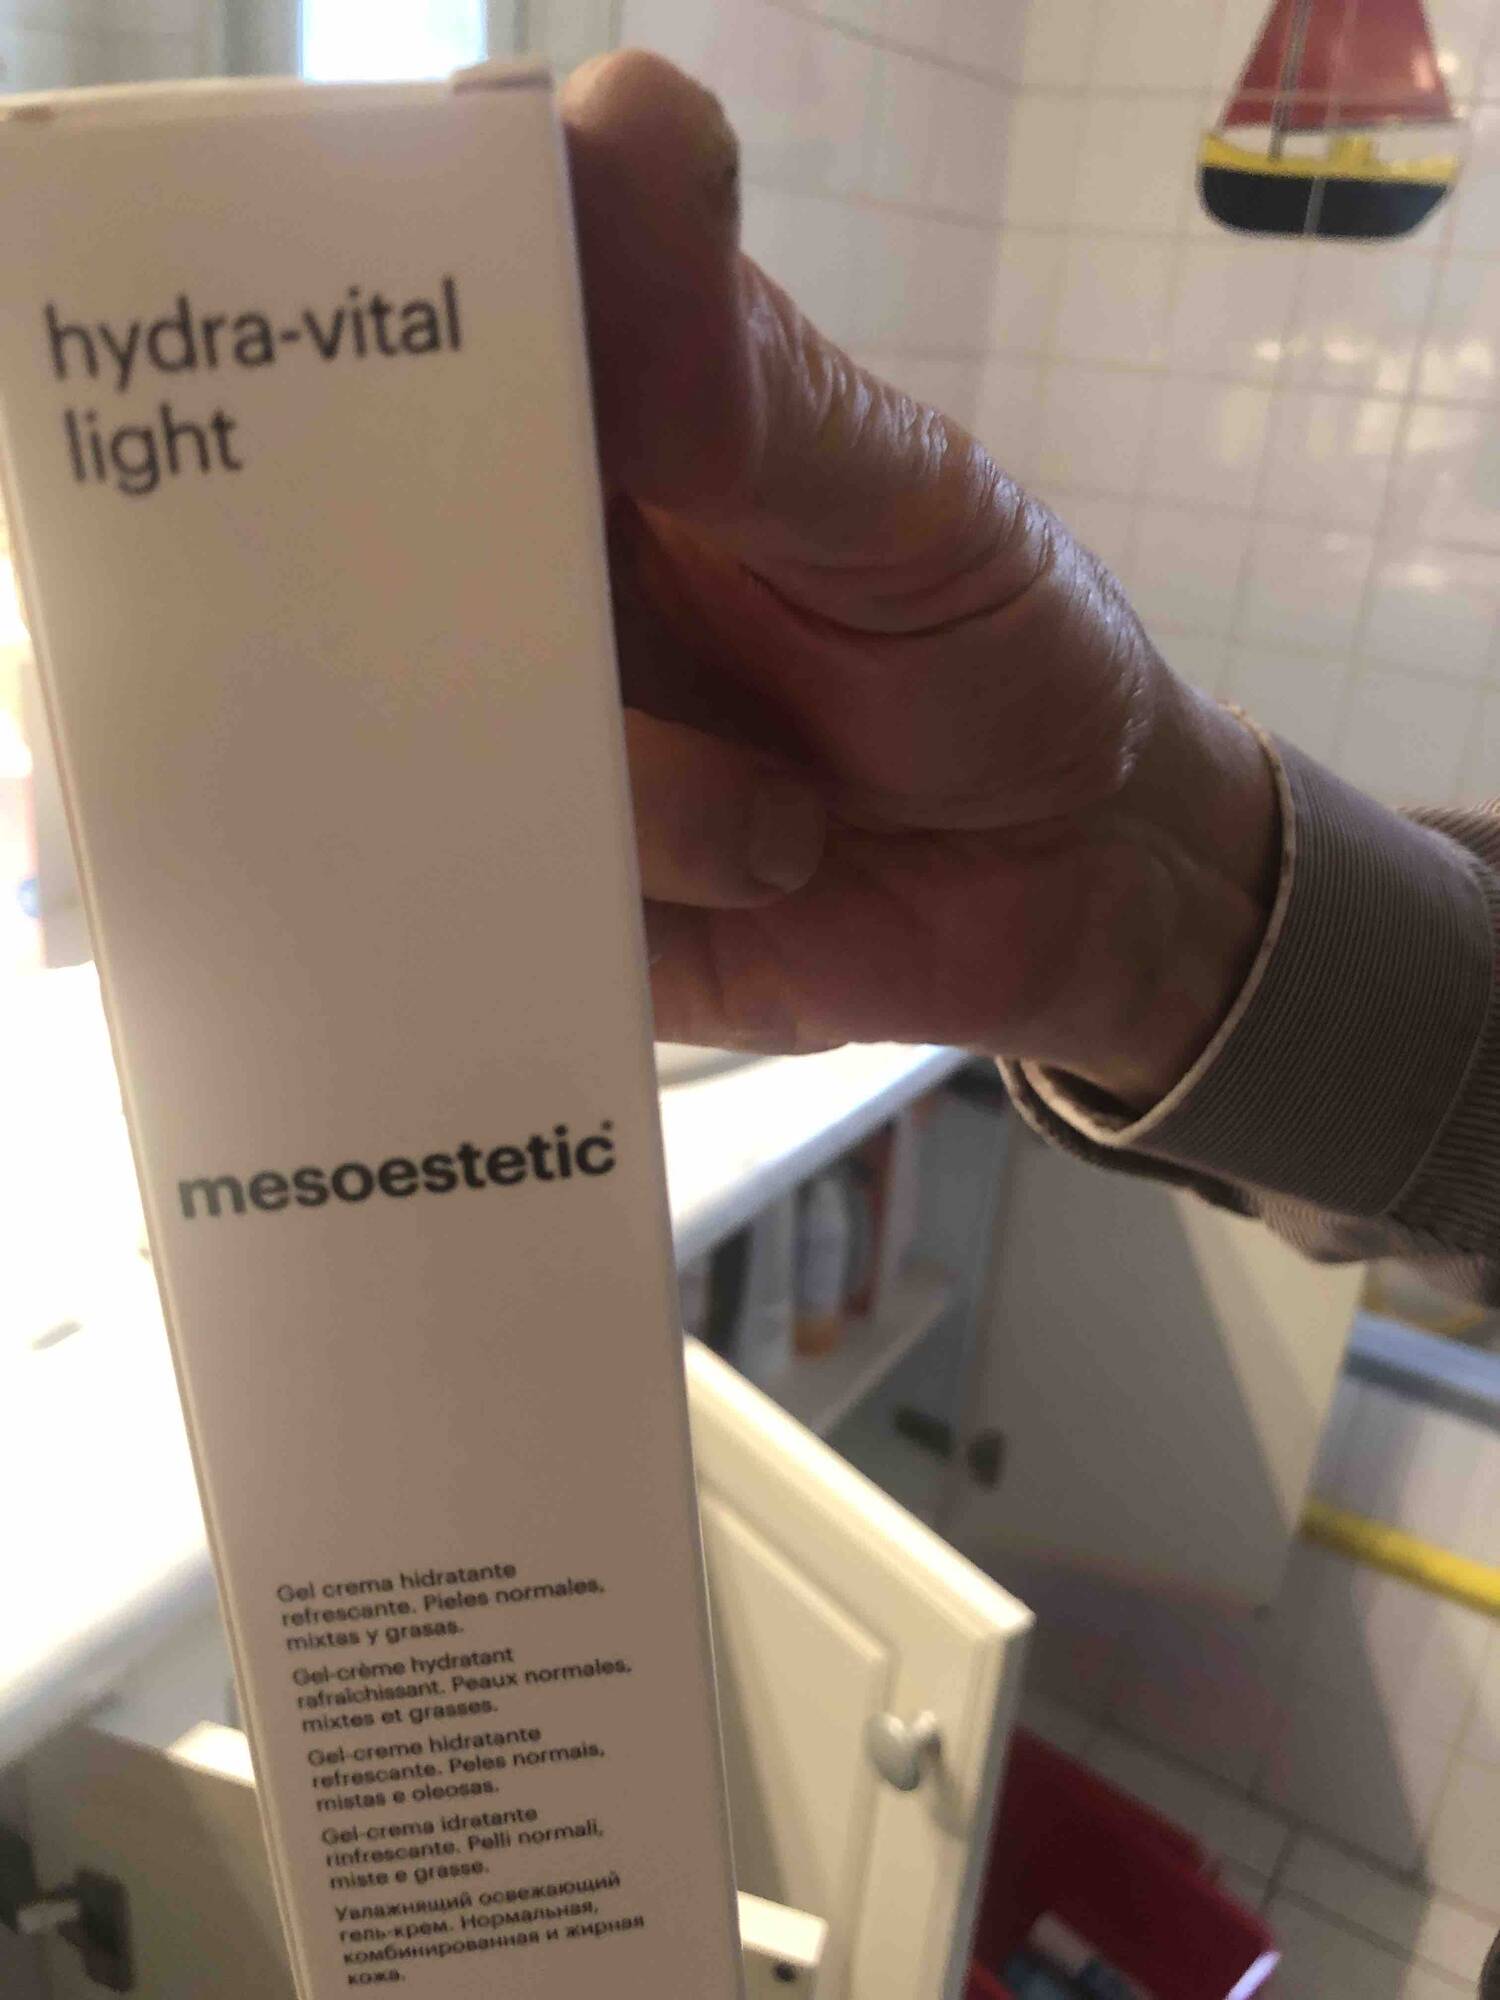 MESOESTETIC - Hydra-vital light - Gel crème hydratant